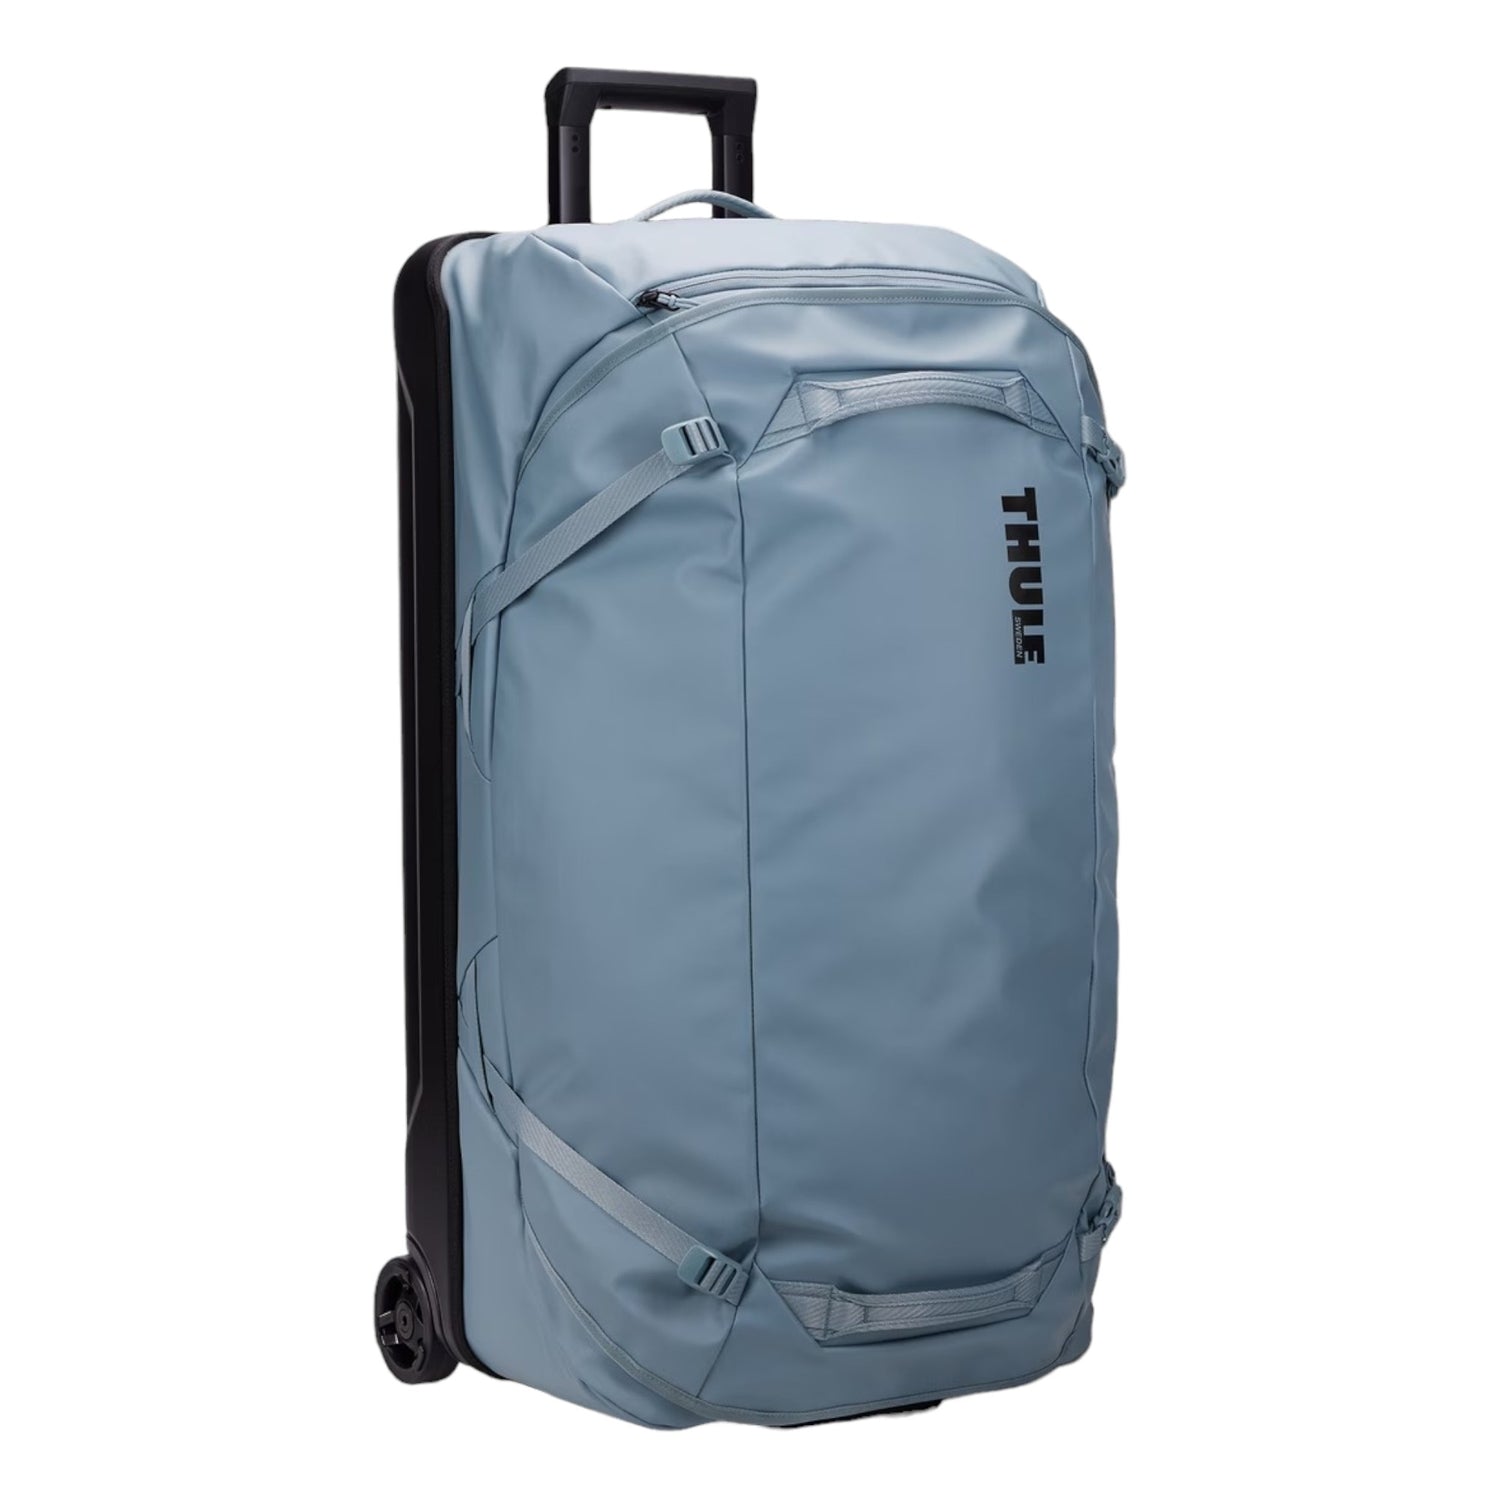 Chasm Wheeled Duffel Bag 110L